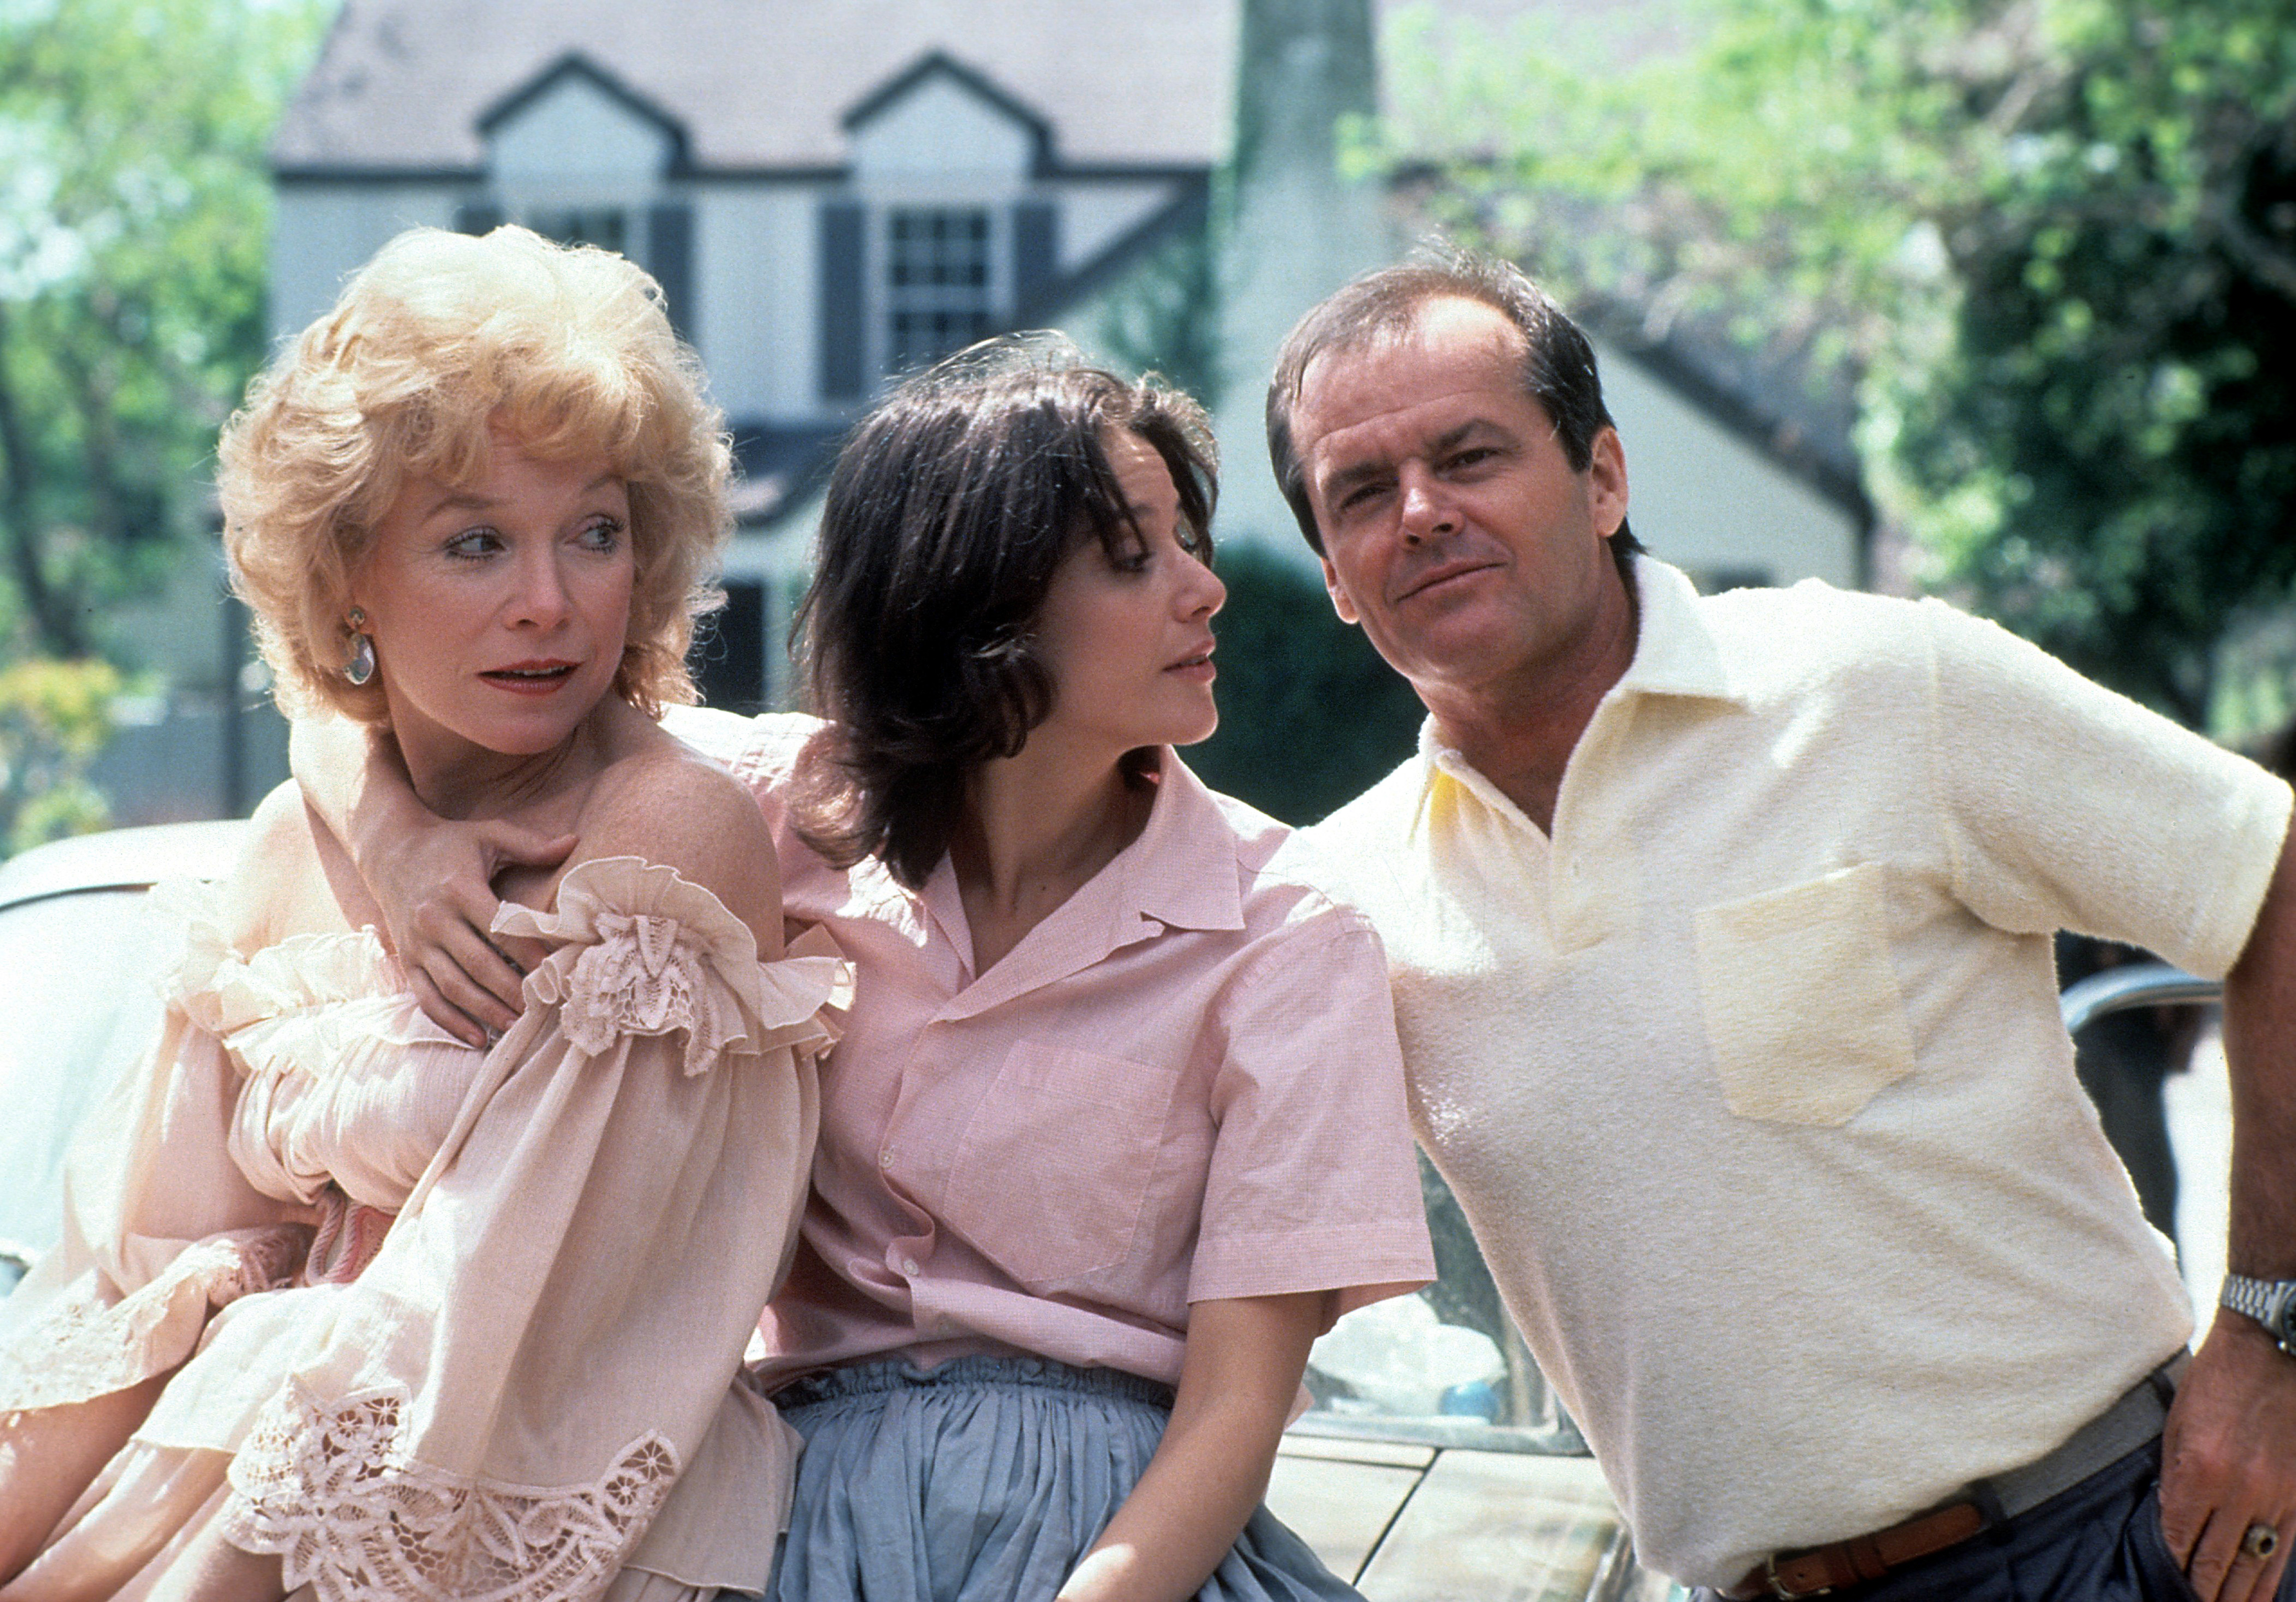 Shirley MacLaine, Debra Winger y Jack Nicholson en el plató de "Terms of Endearment", en 1983. | Fuente: Getty Images